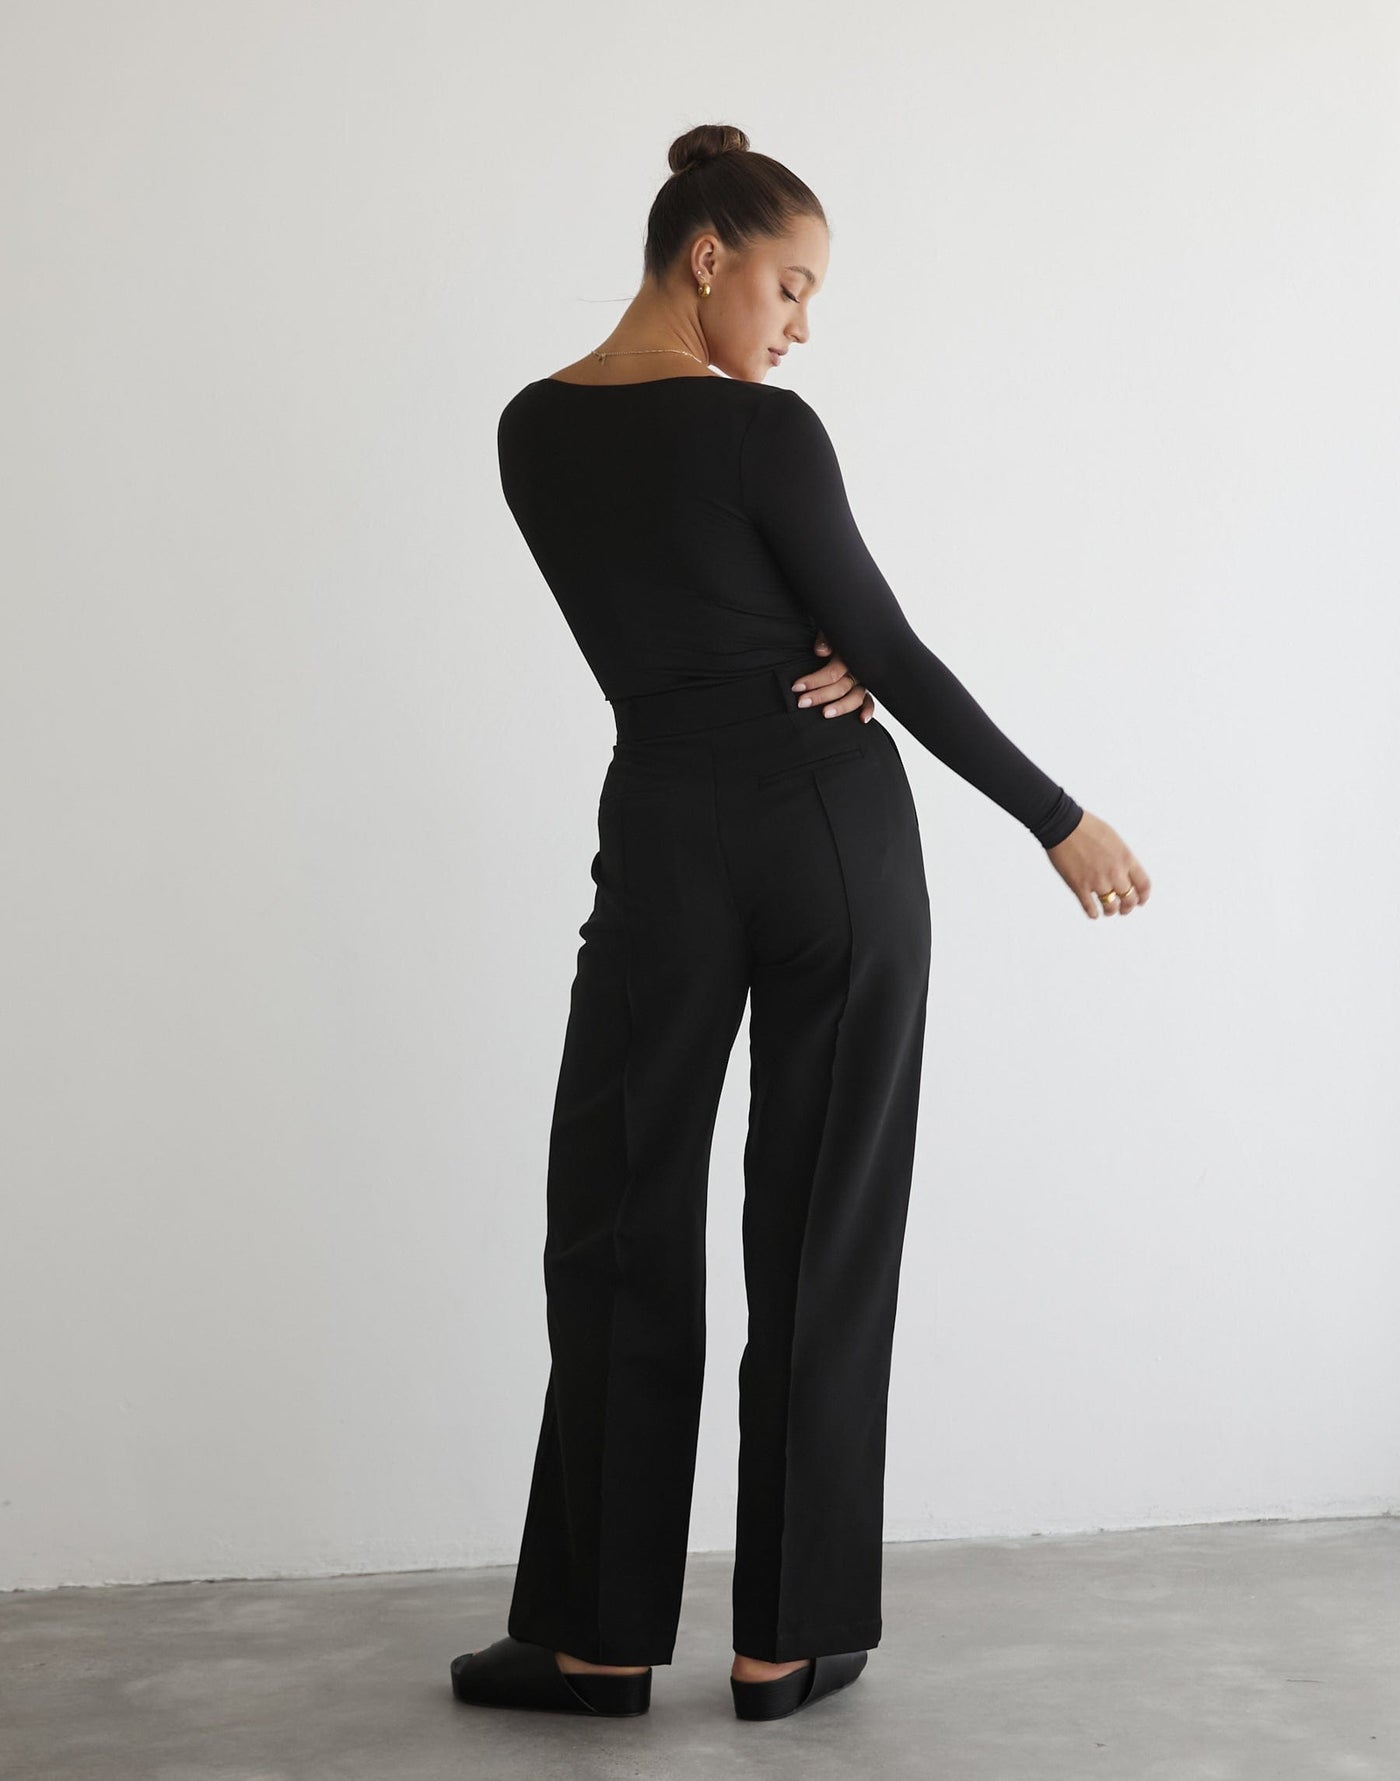 Colden Pants (Black) - Black High Waisted Pants - Women's Pants - Charcoal Clothing